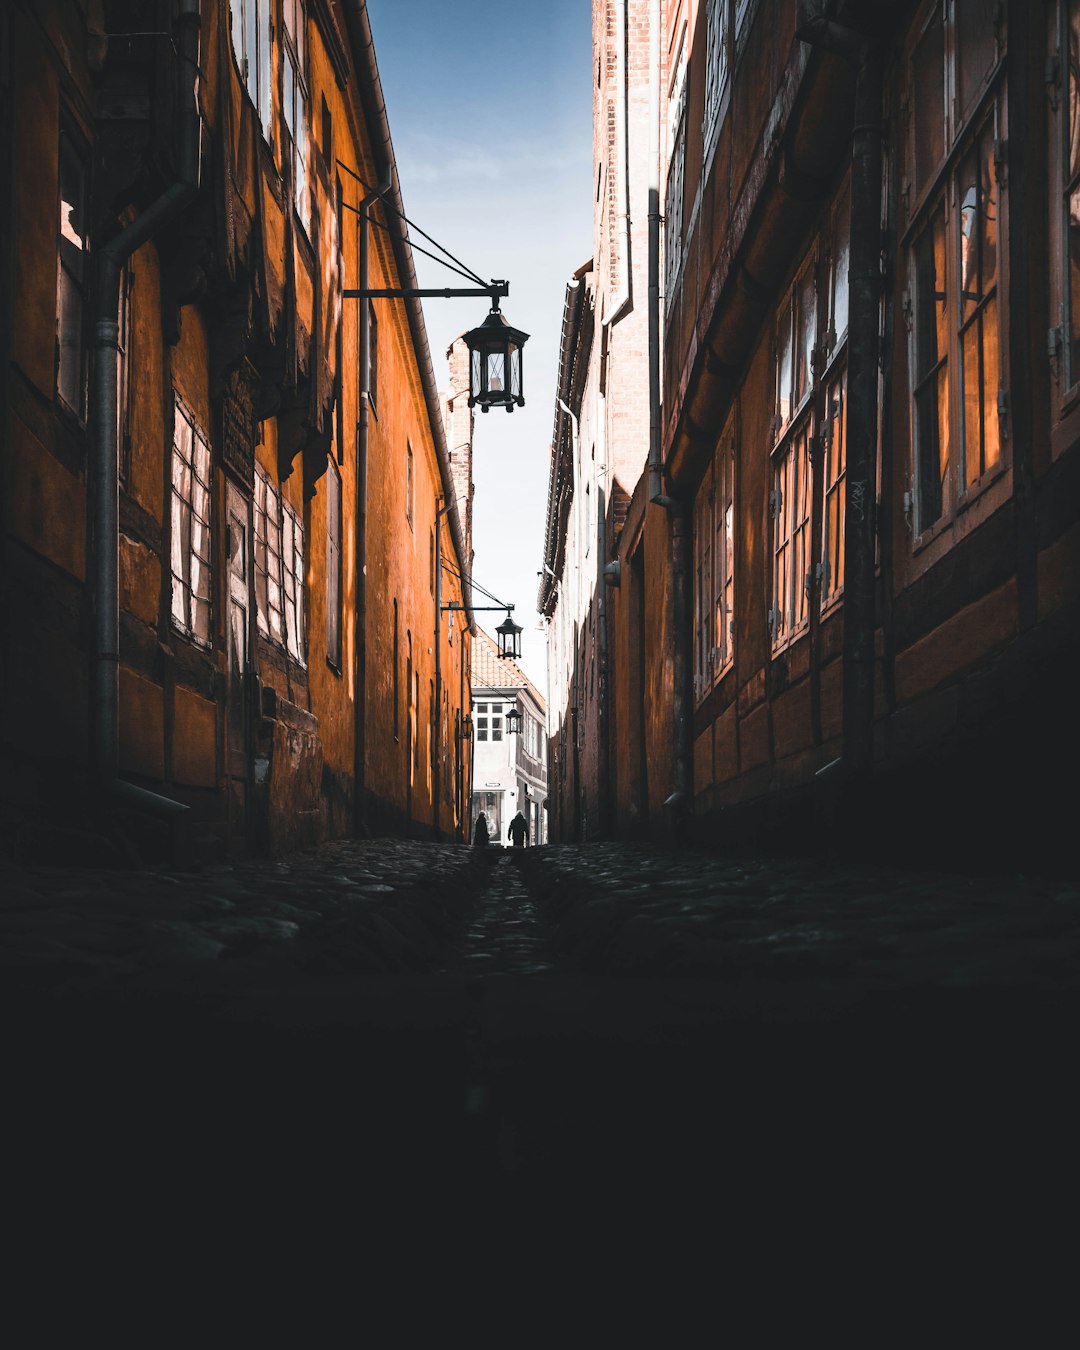 Travel Tips and Stories of Helsingør in Denmark